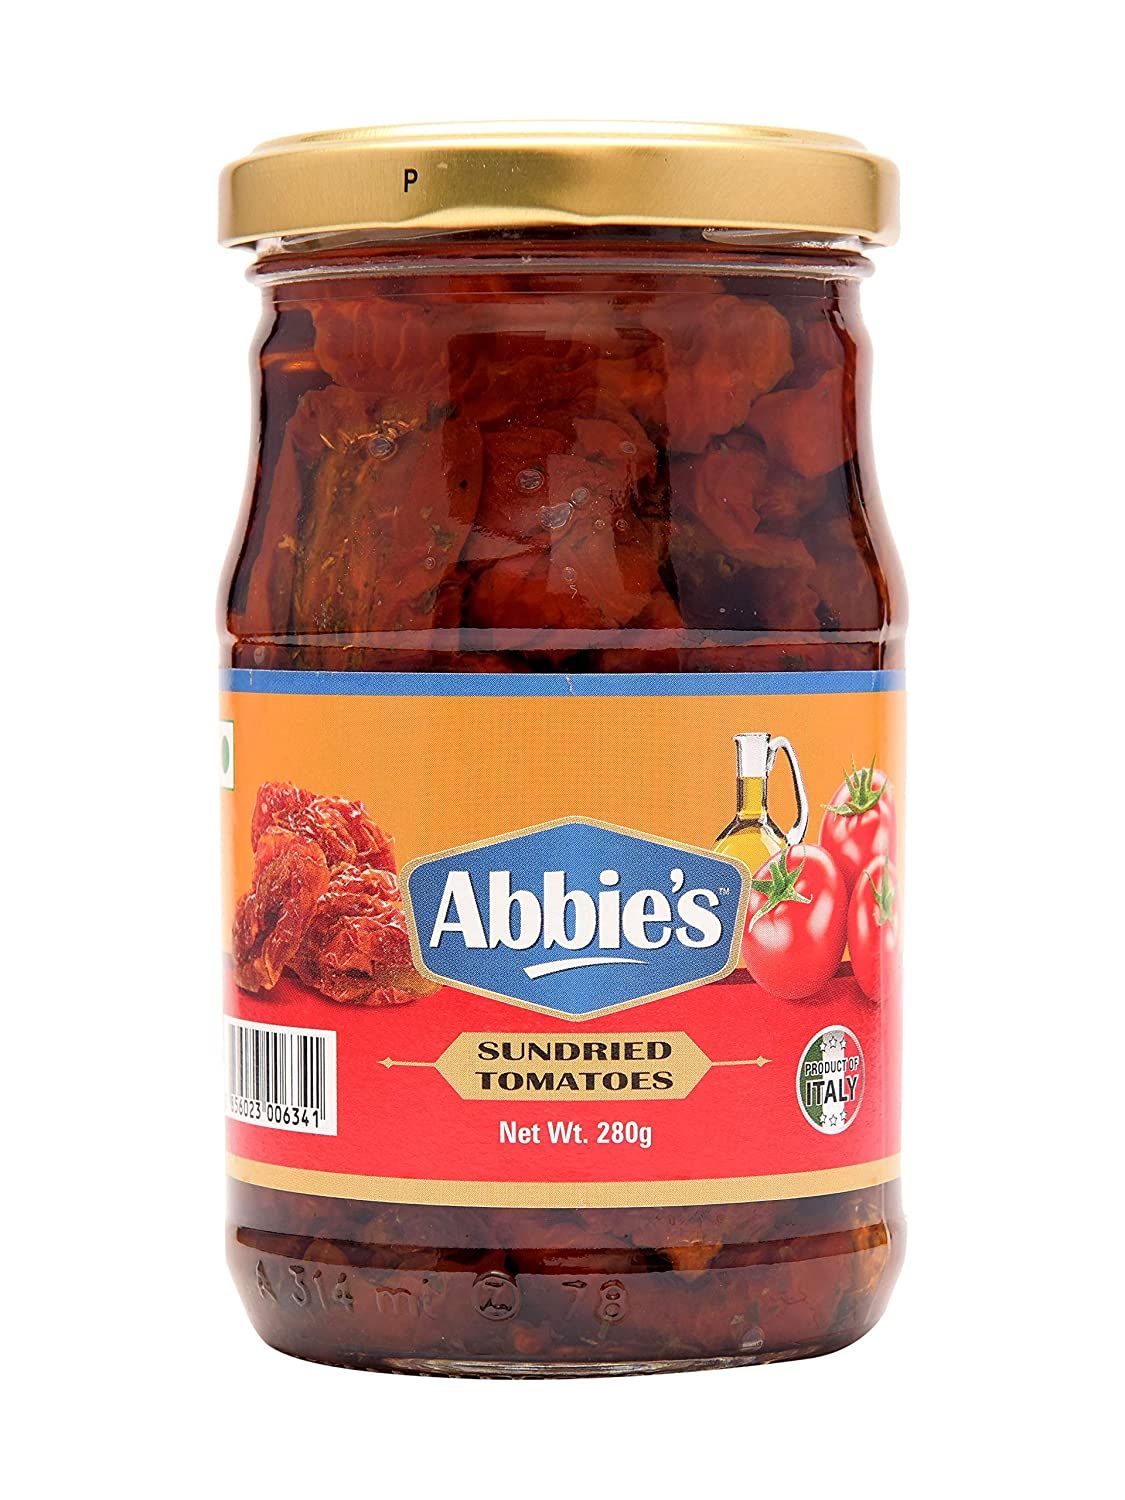 Abbie's Sundried Tomatoes Image